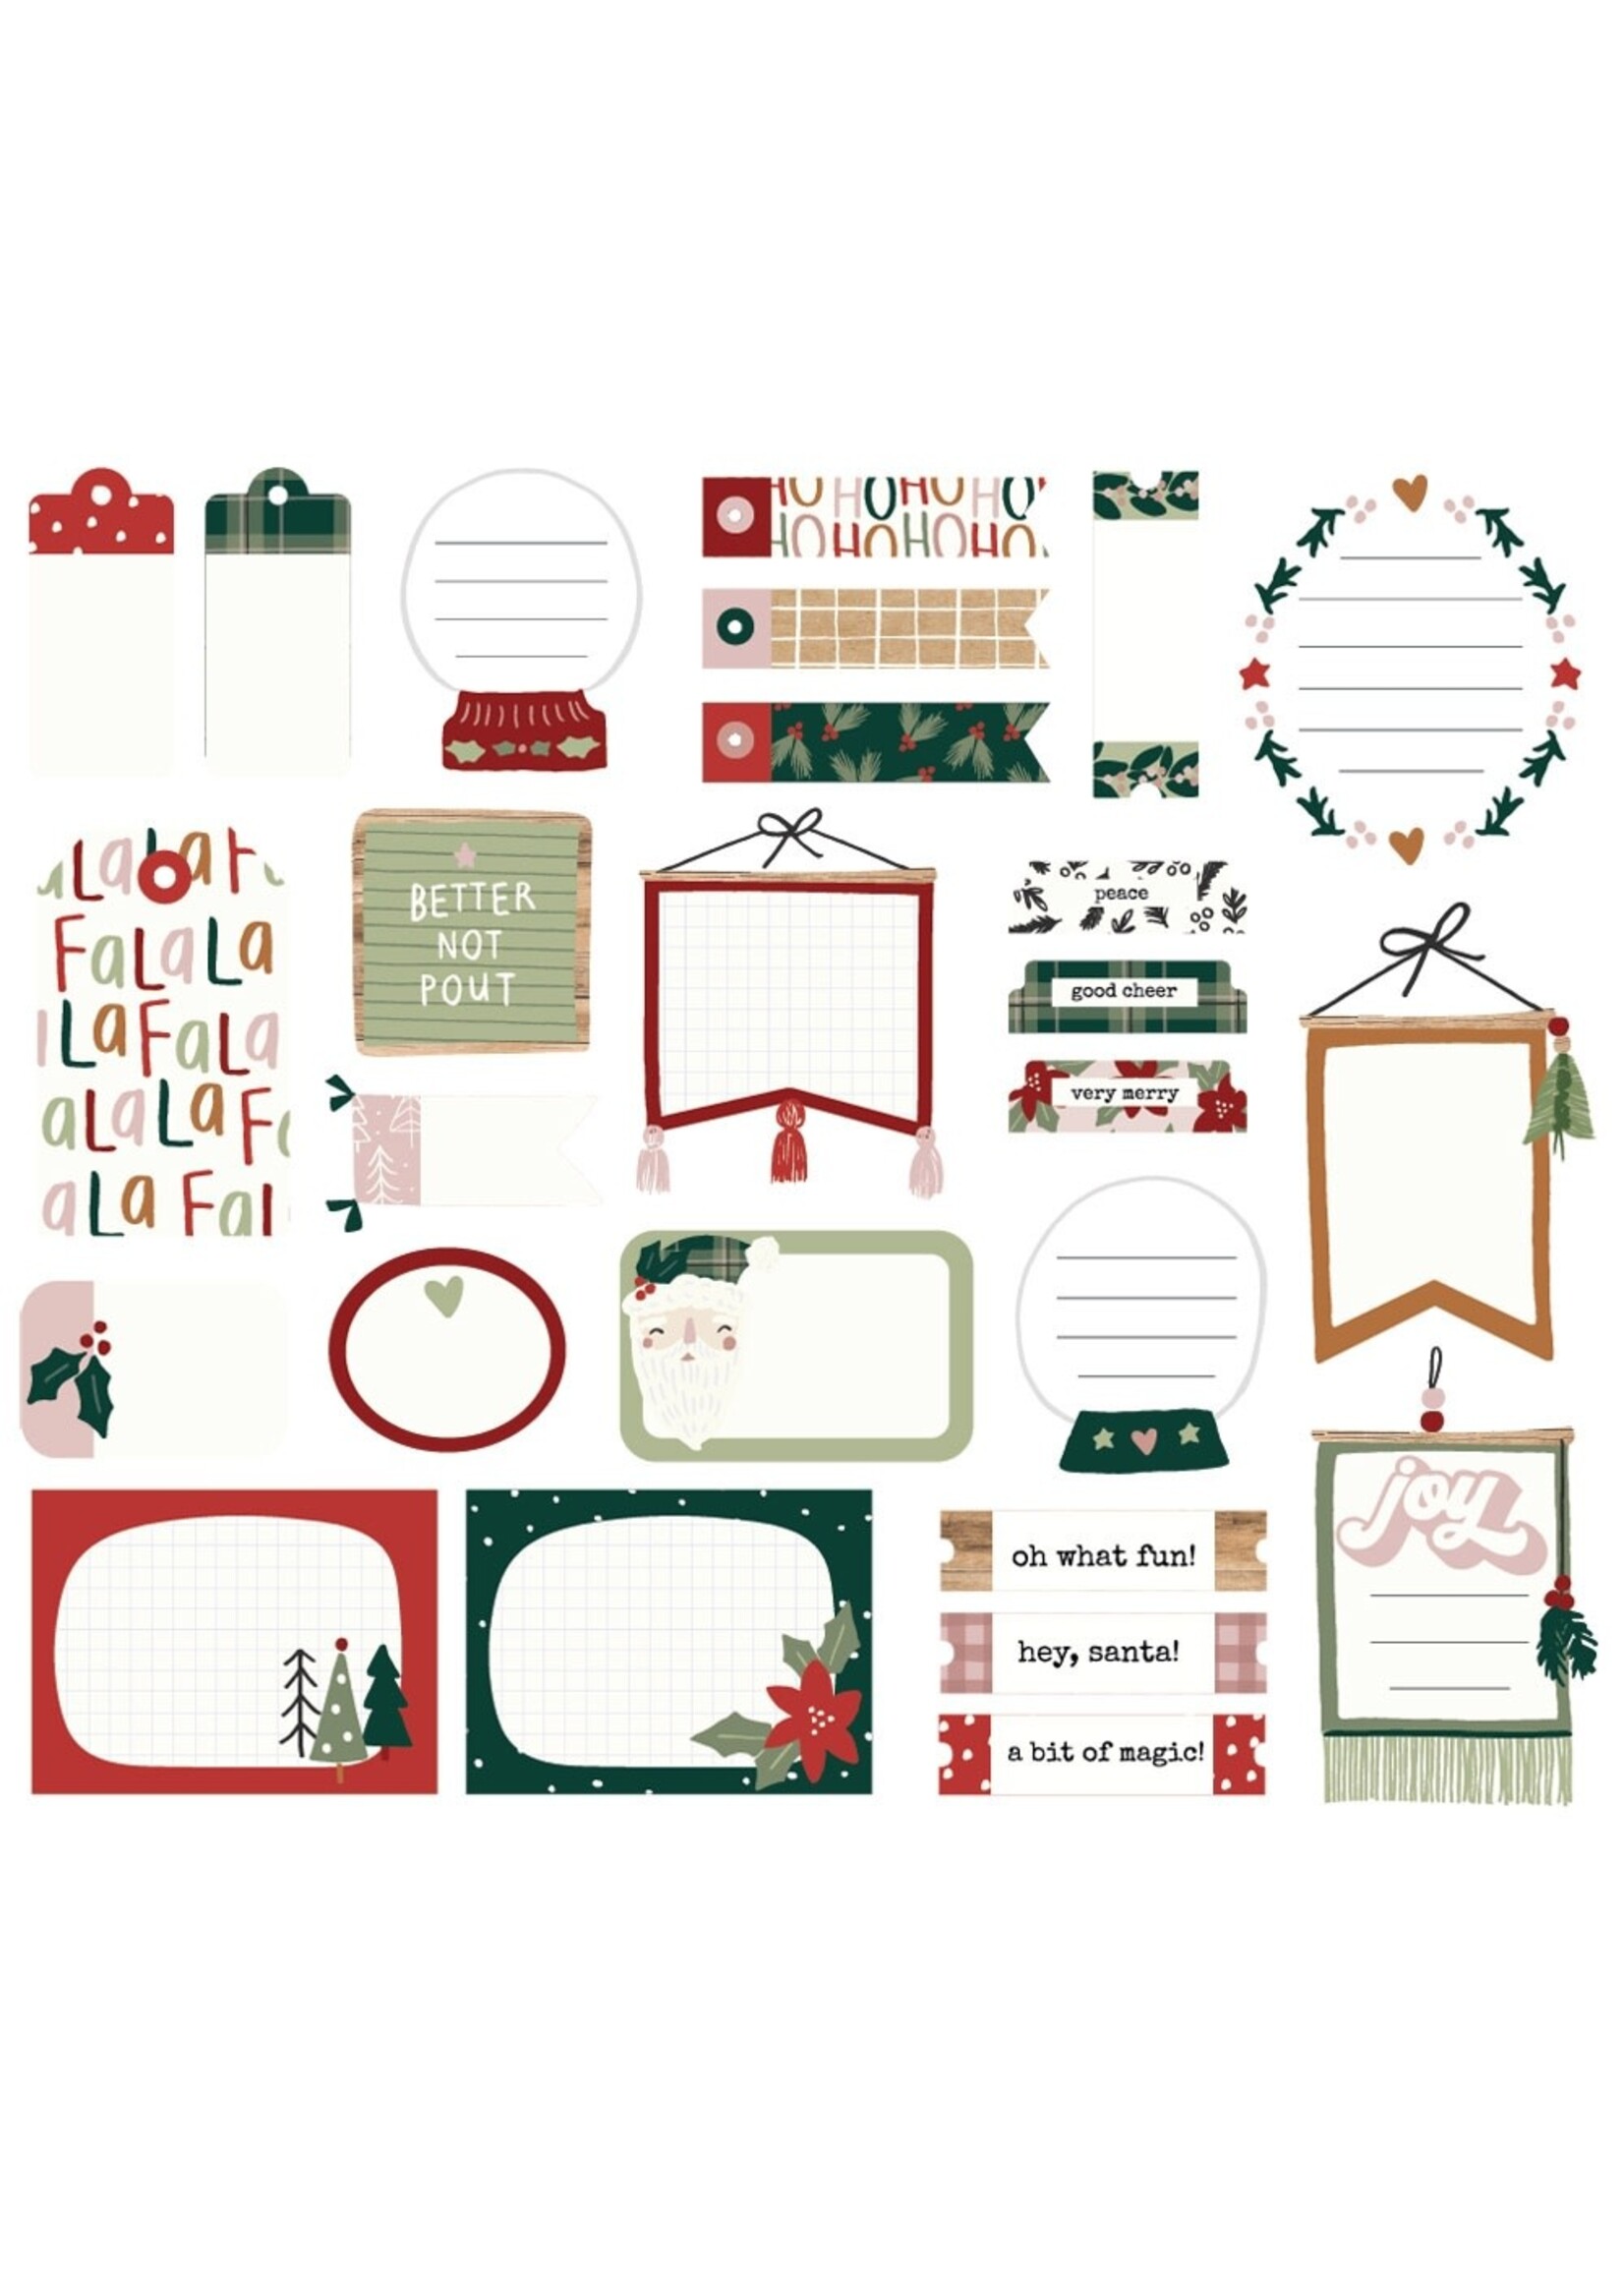 Simple Stories Boho Christmas Bits & Pieces Die-Cuts 26/Pkg-Journal